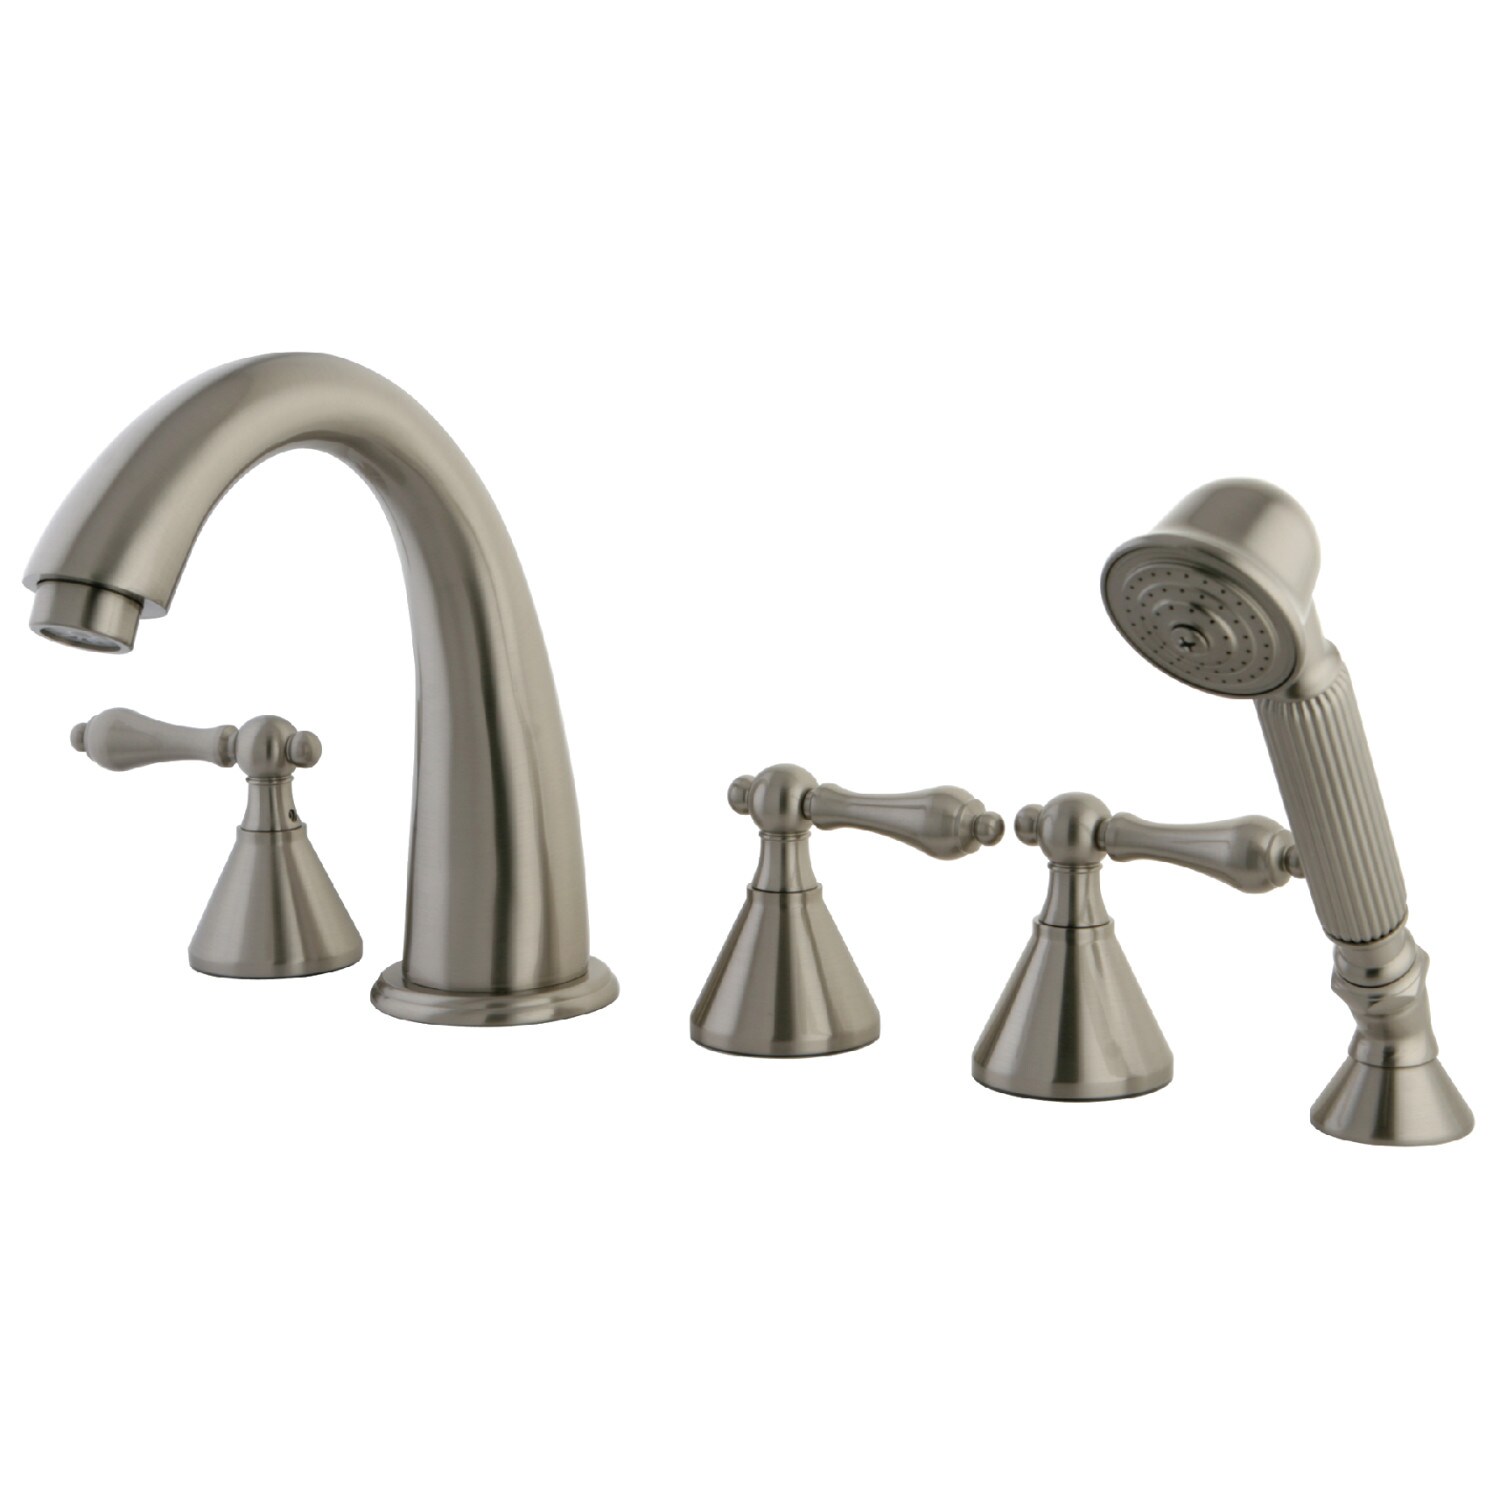 Oil Rubbed Bronze Ceramic Handles 5-hole Tub Faucet Hand Shower Mixer Taps 